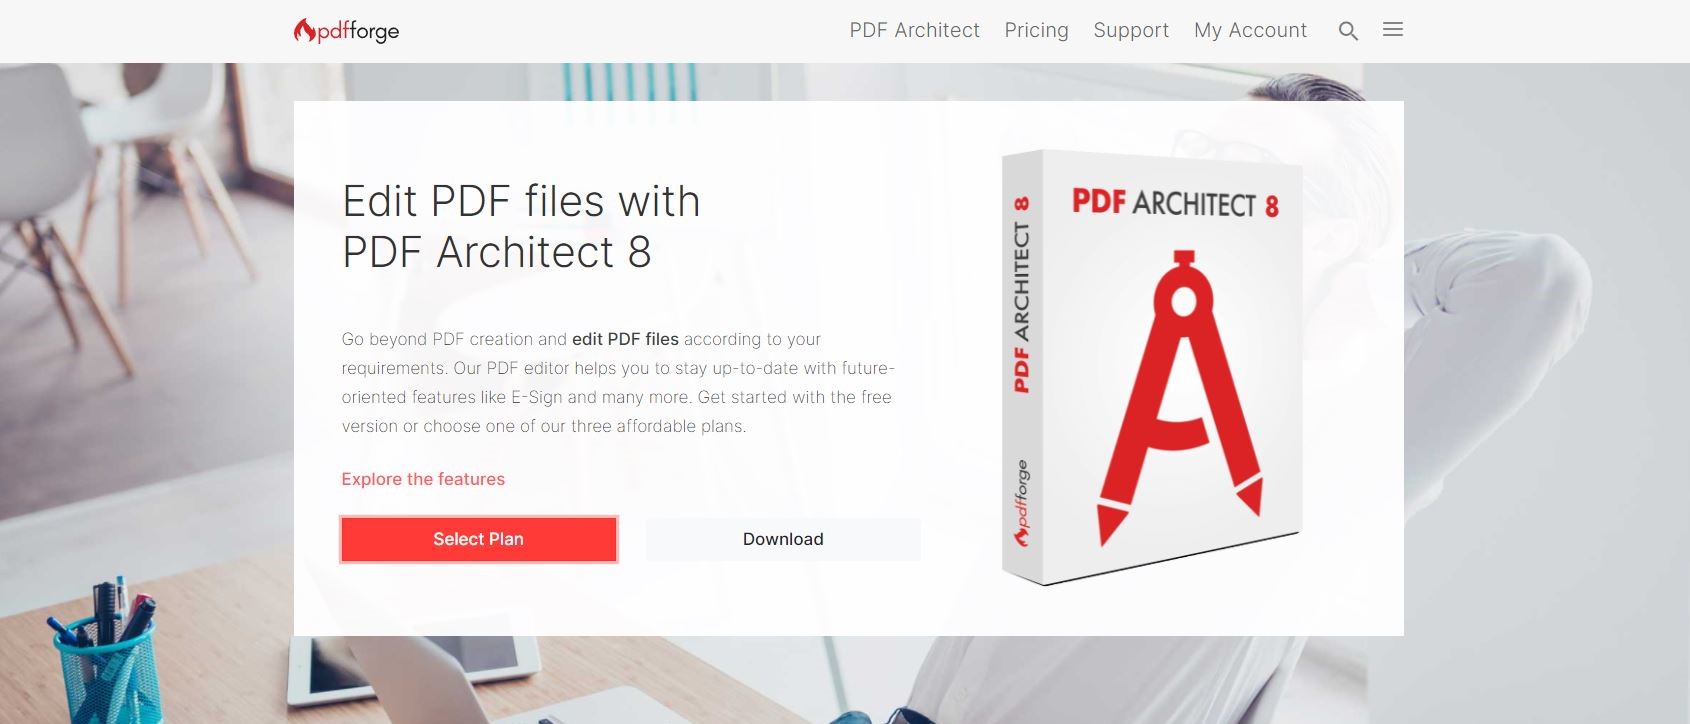 PDF Architect Pro 9.0.45.21322 download the new